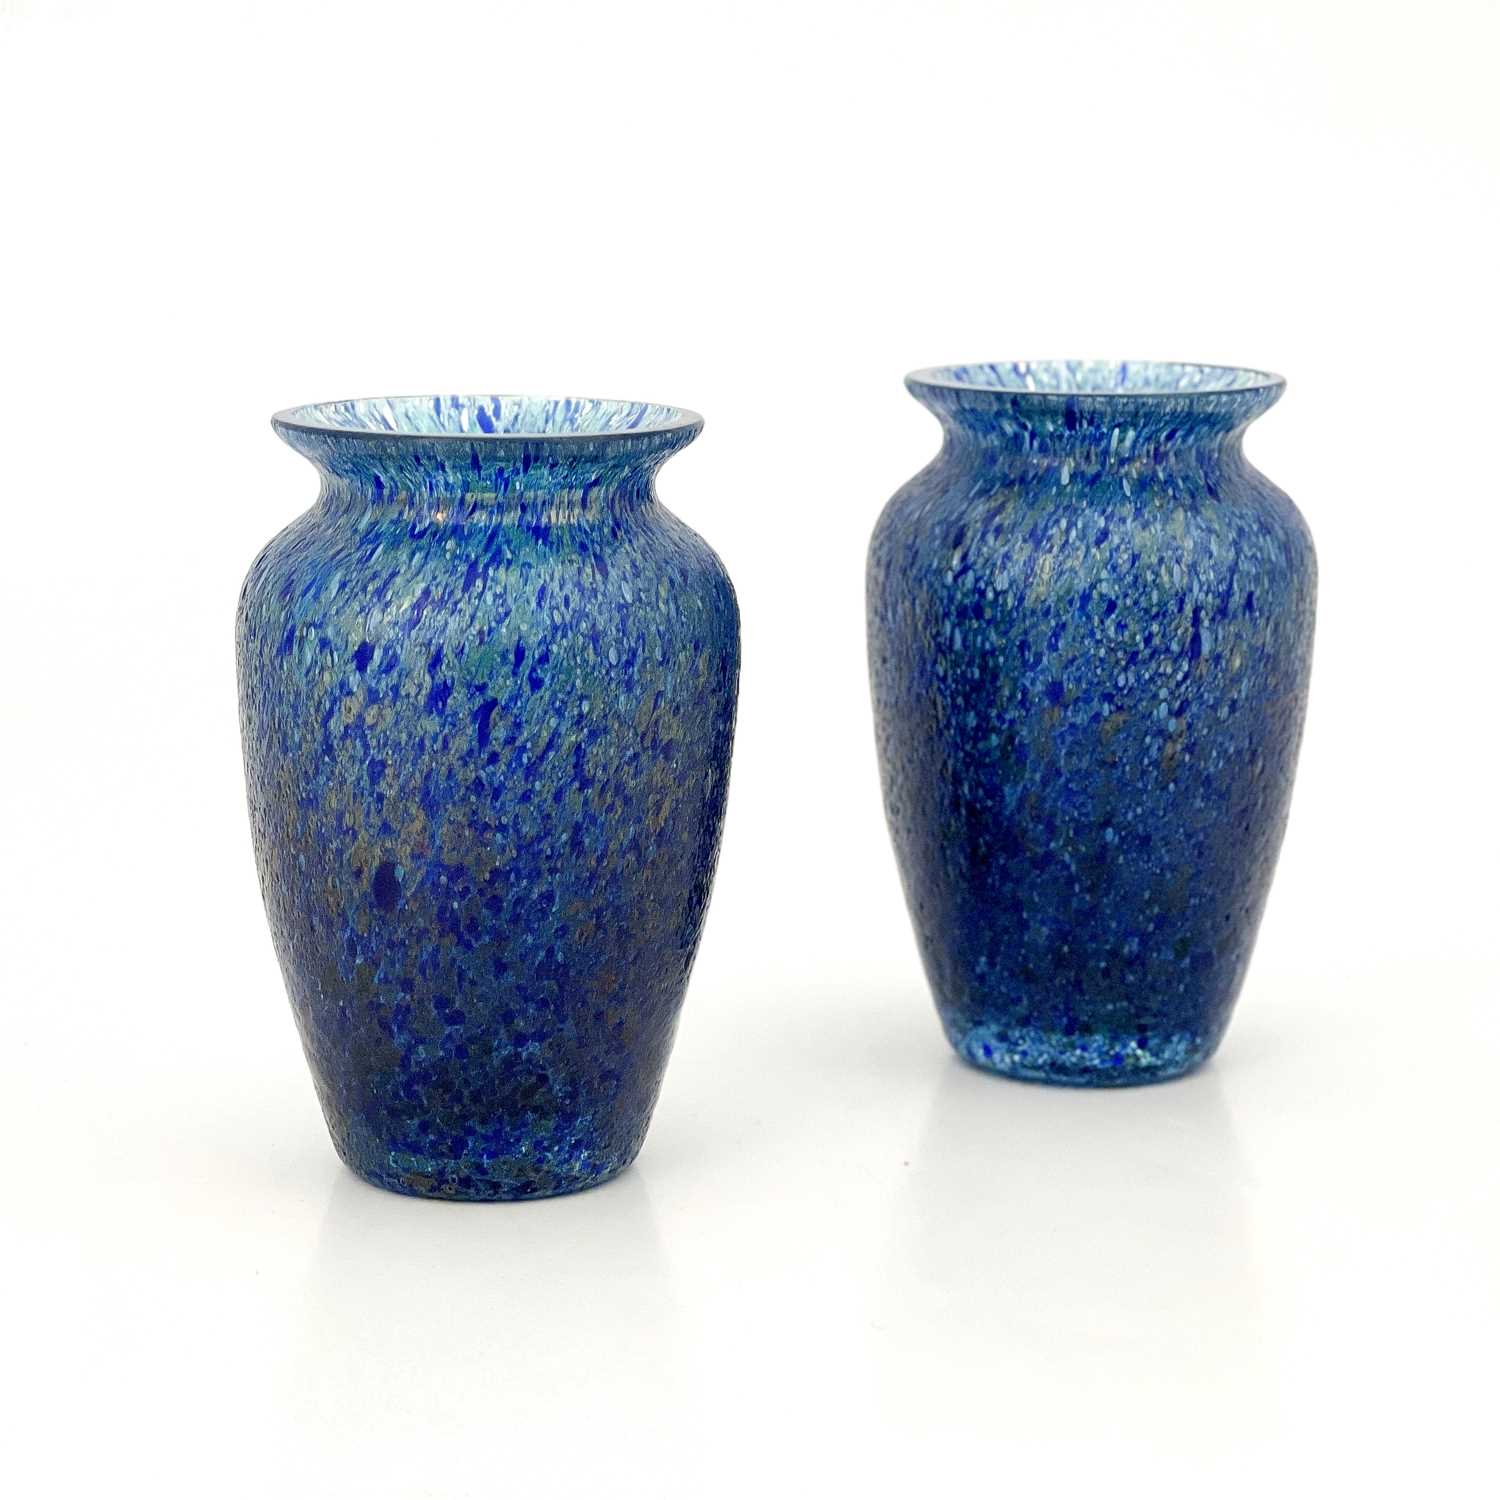 A pair of Royal Brierley studio range glass vases, shouldered form, mottled iridescent blue, green